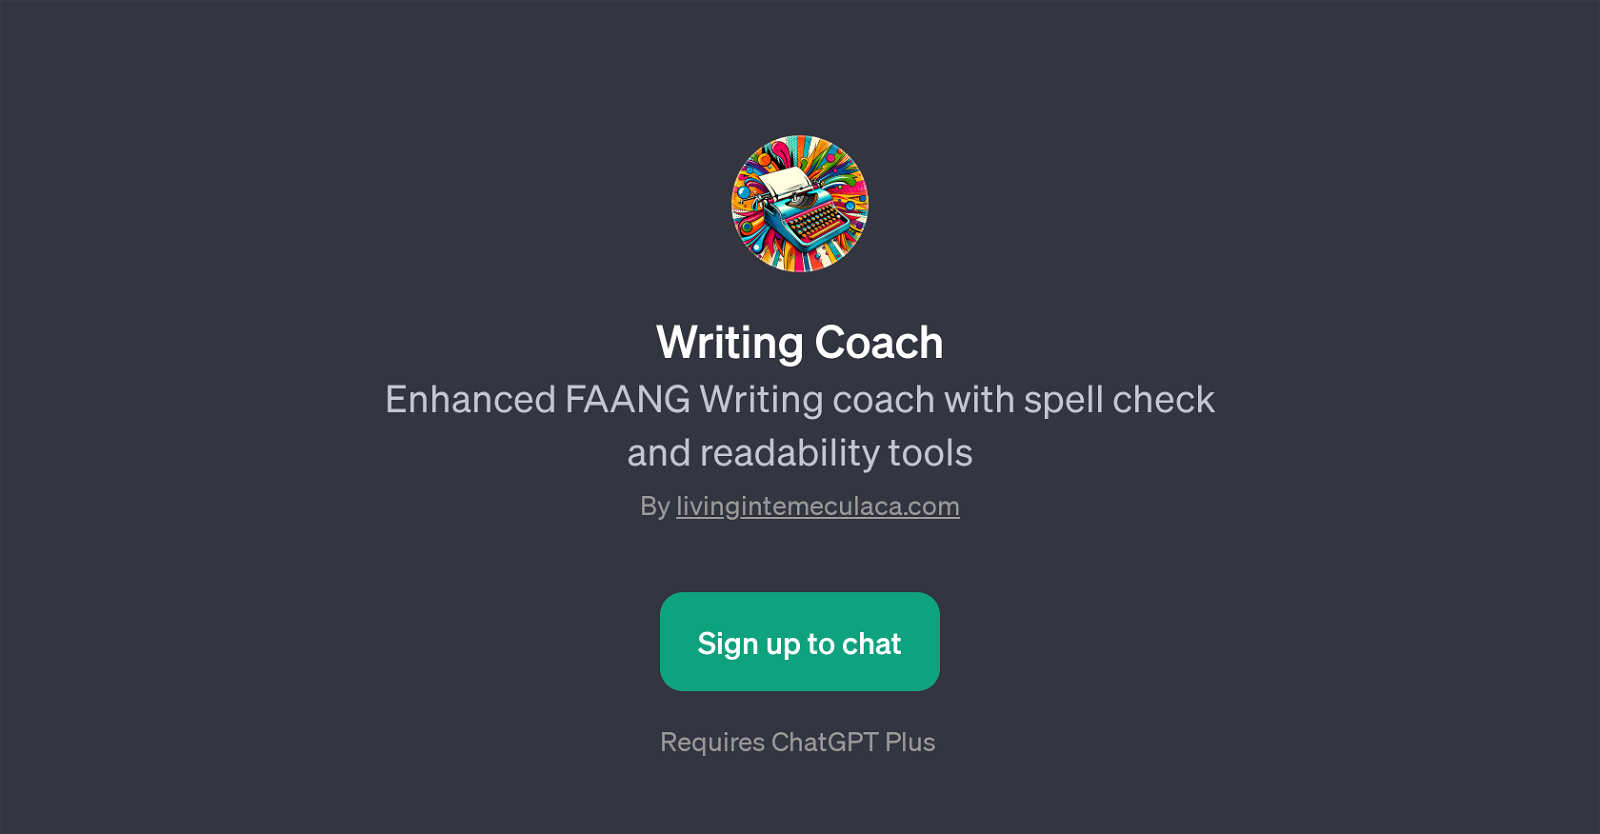 Writing Coach website